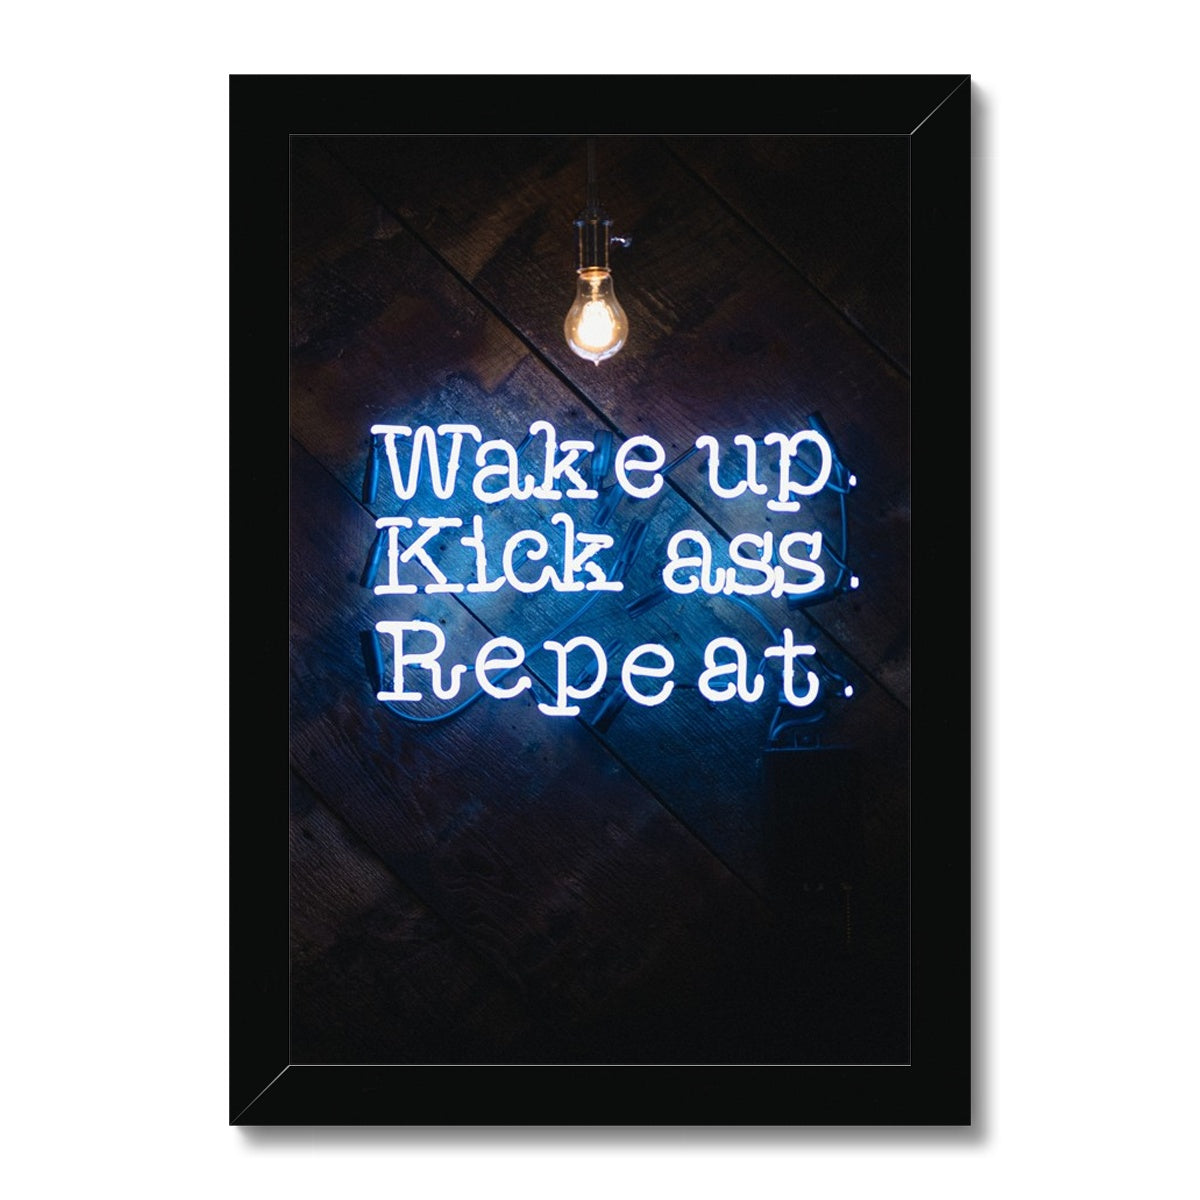 Wake Up - KA - Repeat